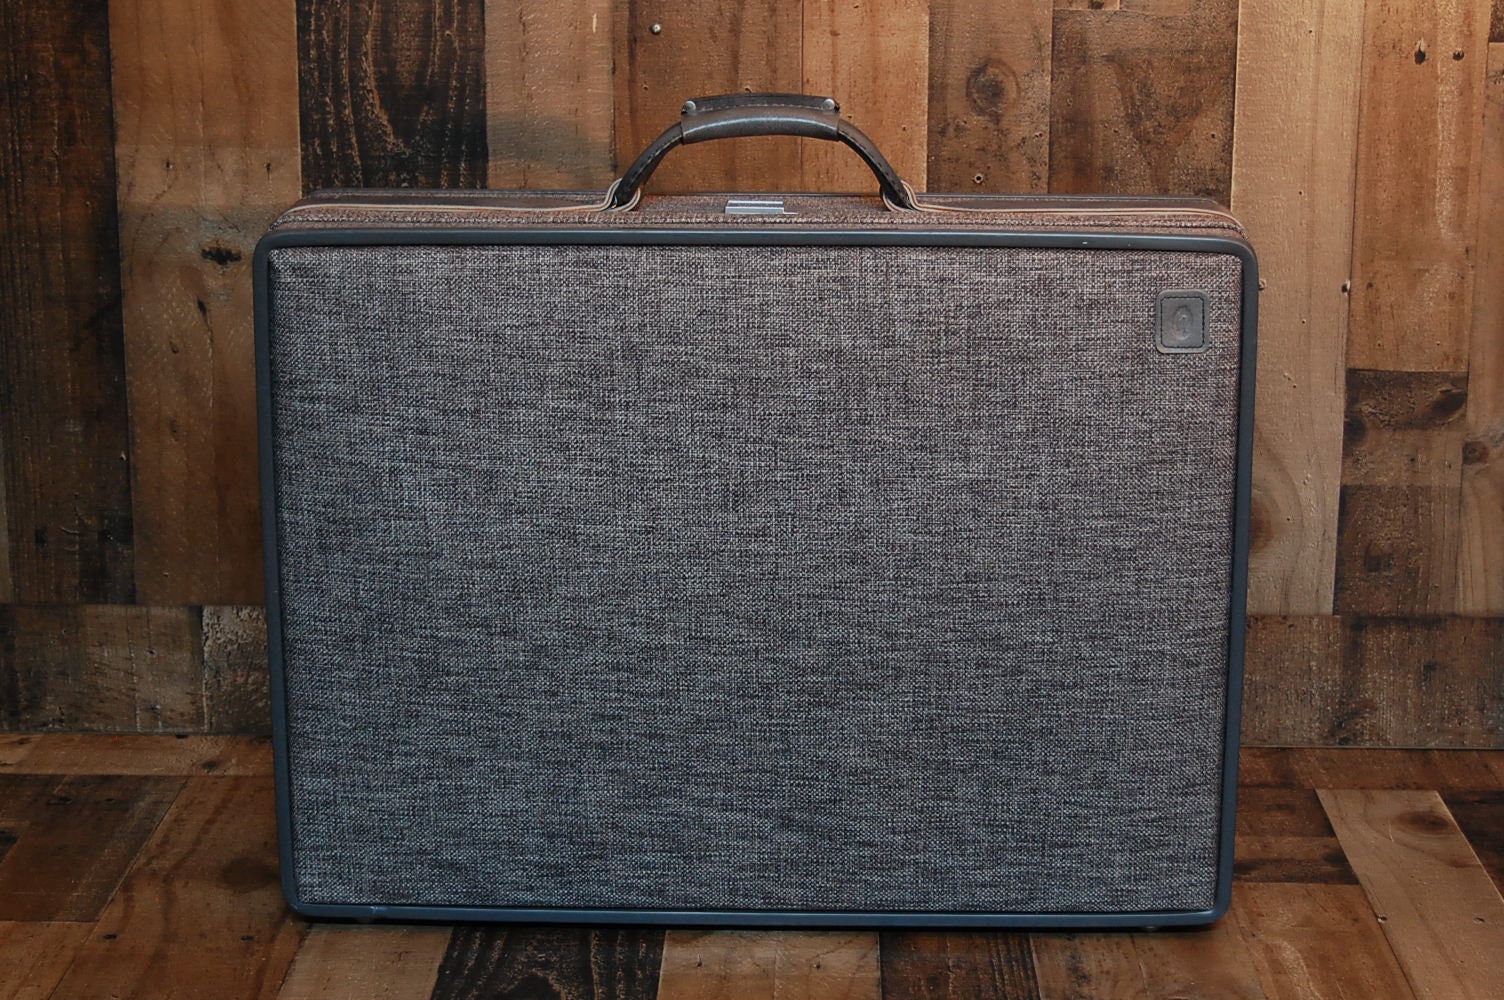 Hartman Luggage 24x18x7 Tweed & Belting Leather Vintage Travel